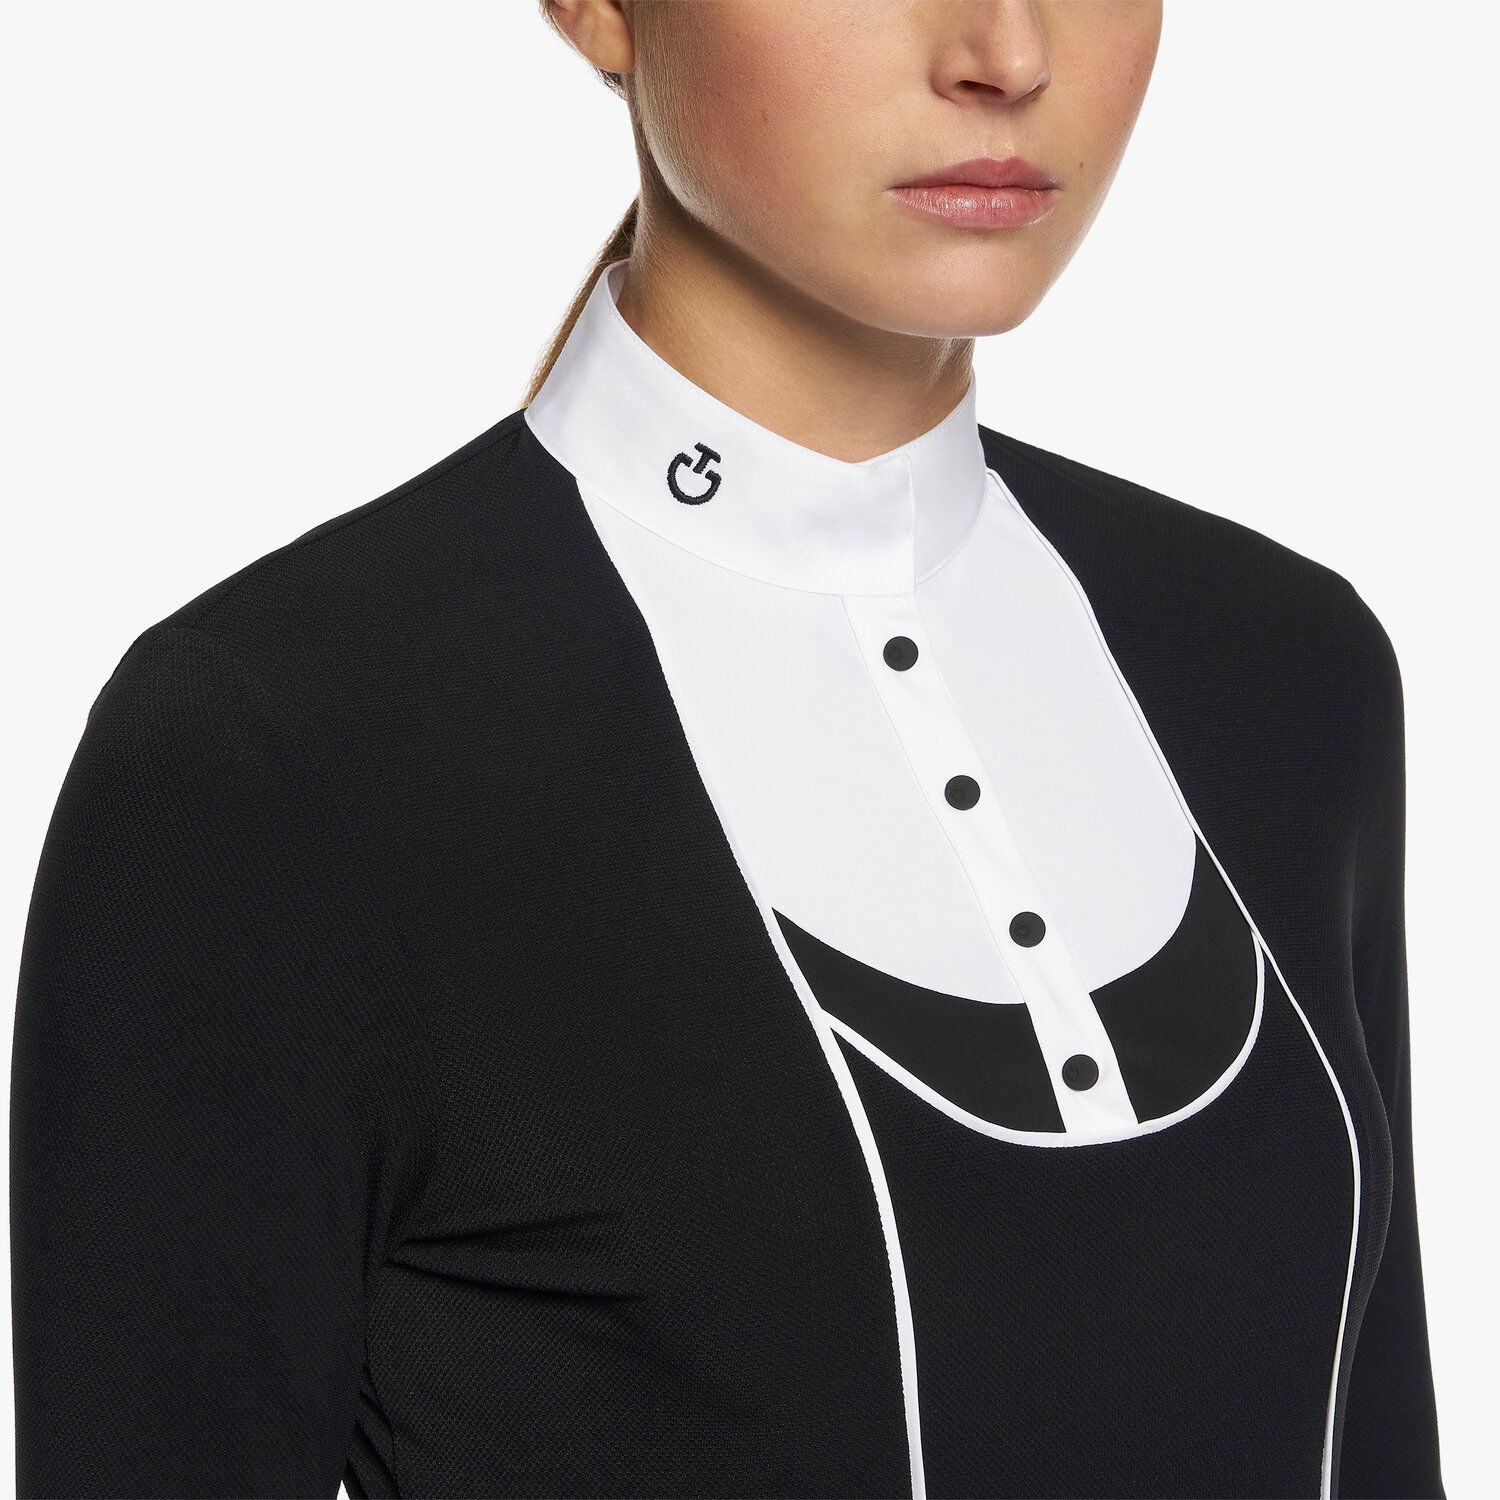 Cavalleria Toscana Women’s jersey show shirt with buttons BLACK-6